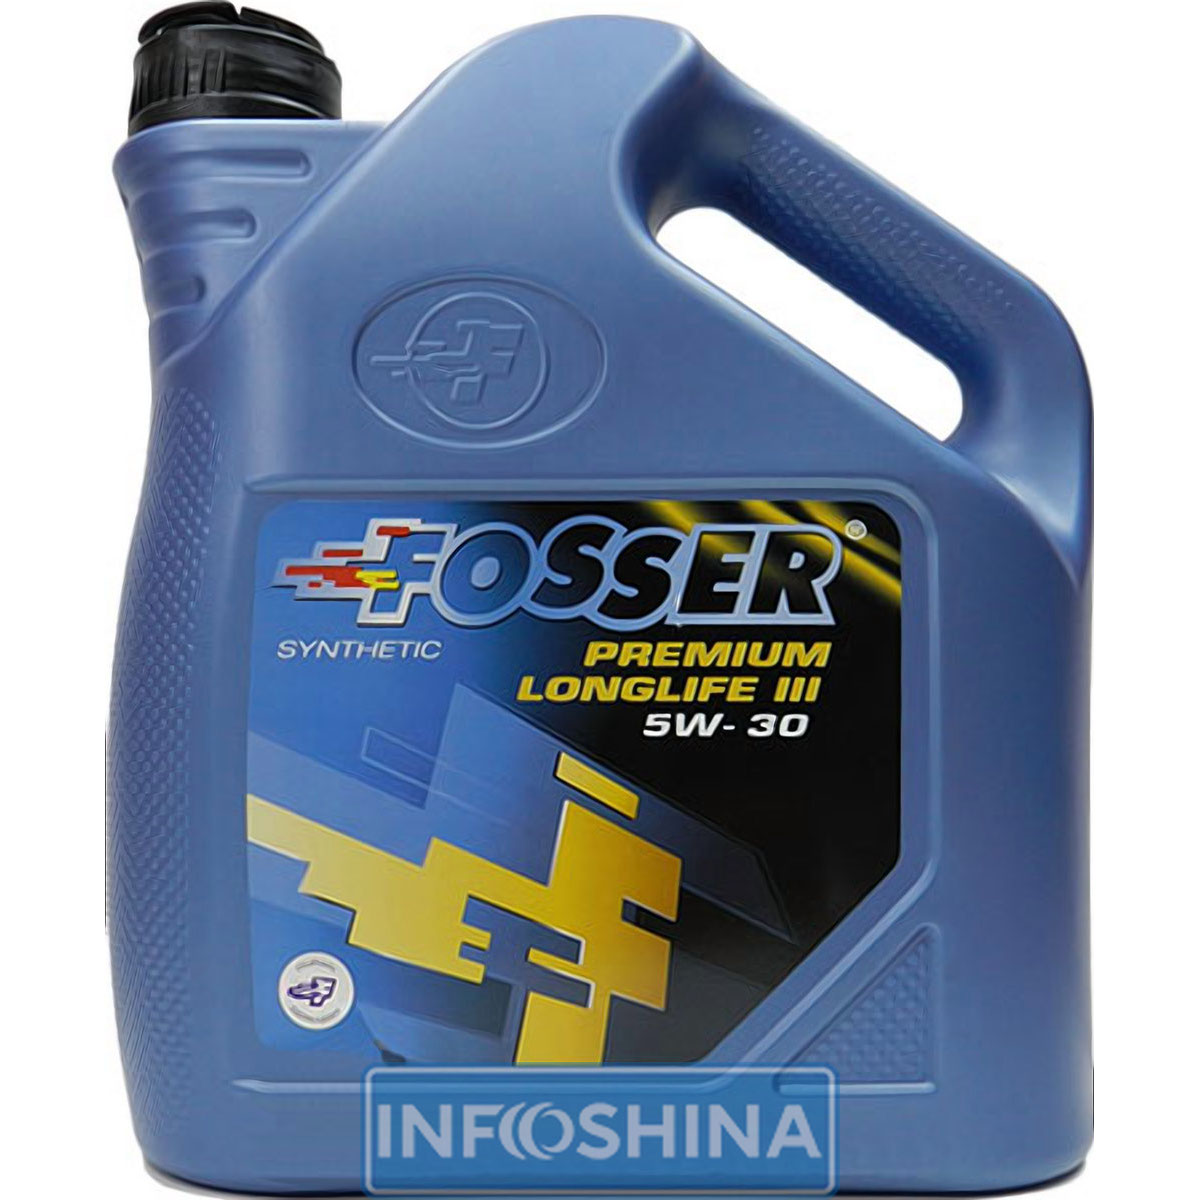 Fosser Premium Longlife III 5W-30